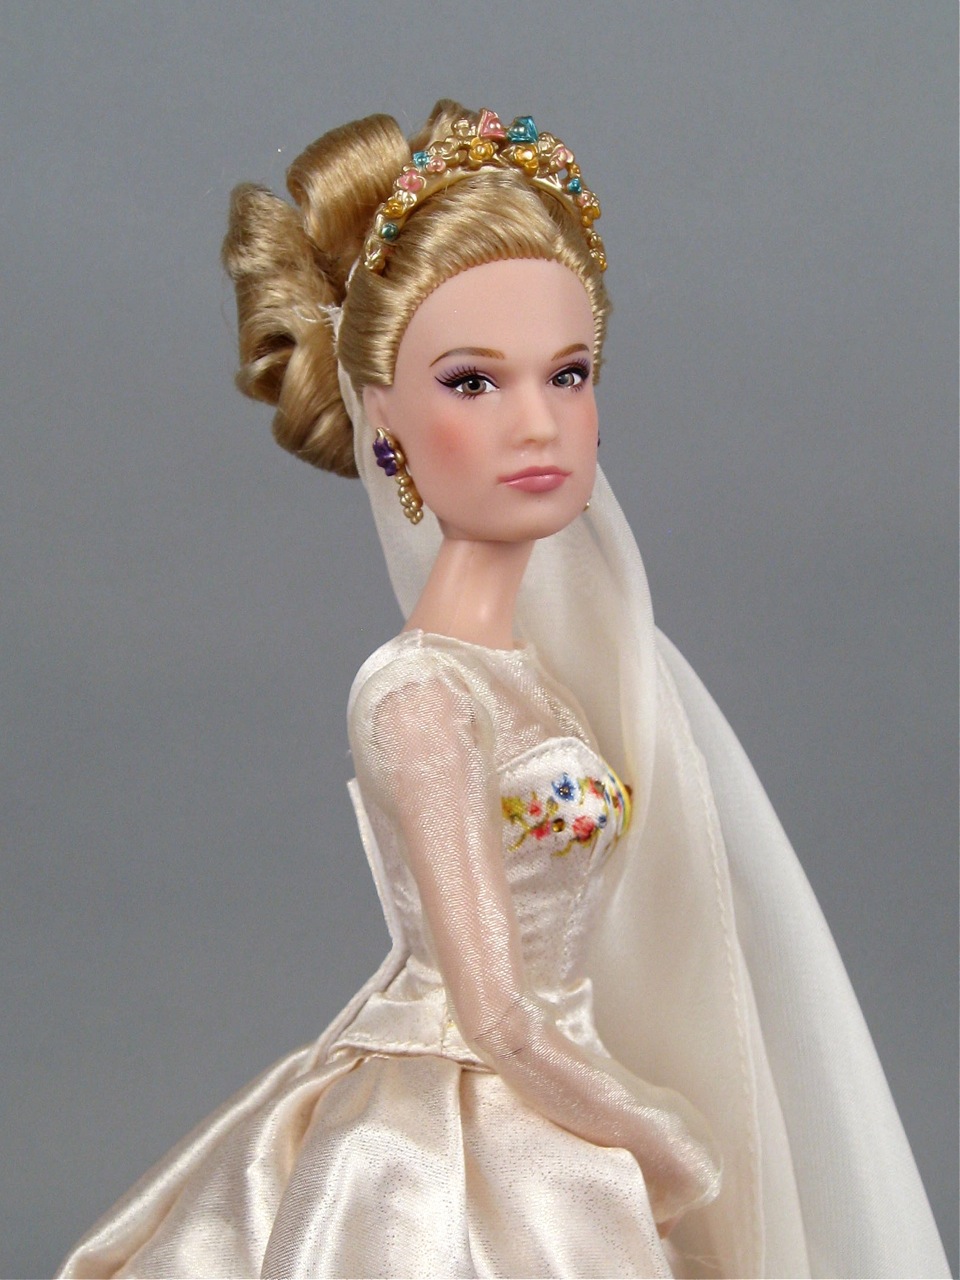 Cinderella ball grown dress tiara crown for American girl 18" Doll dress 2pc